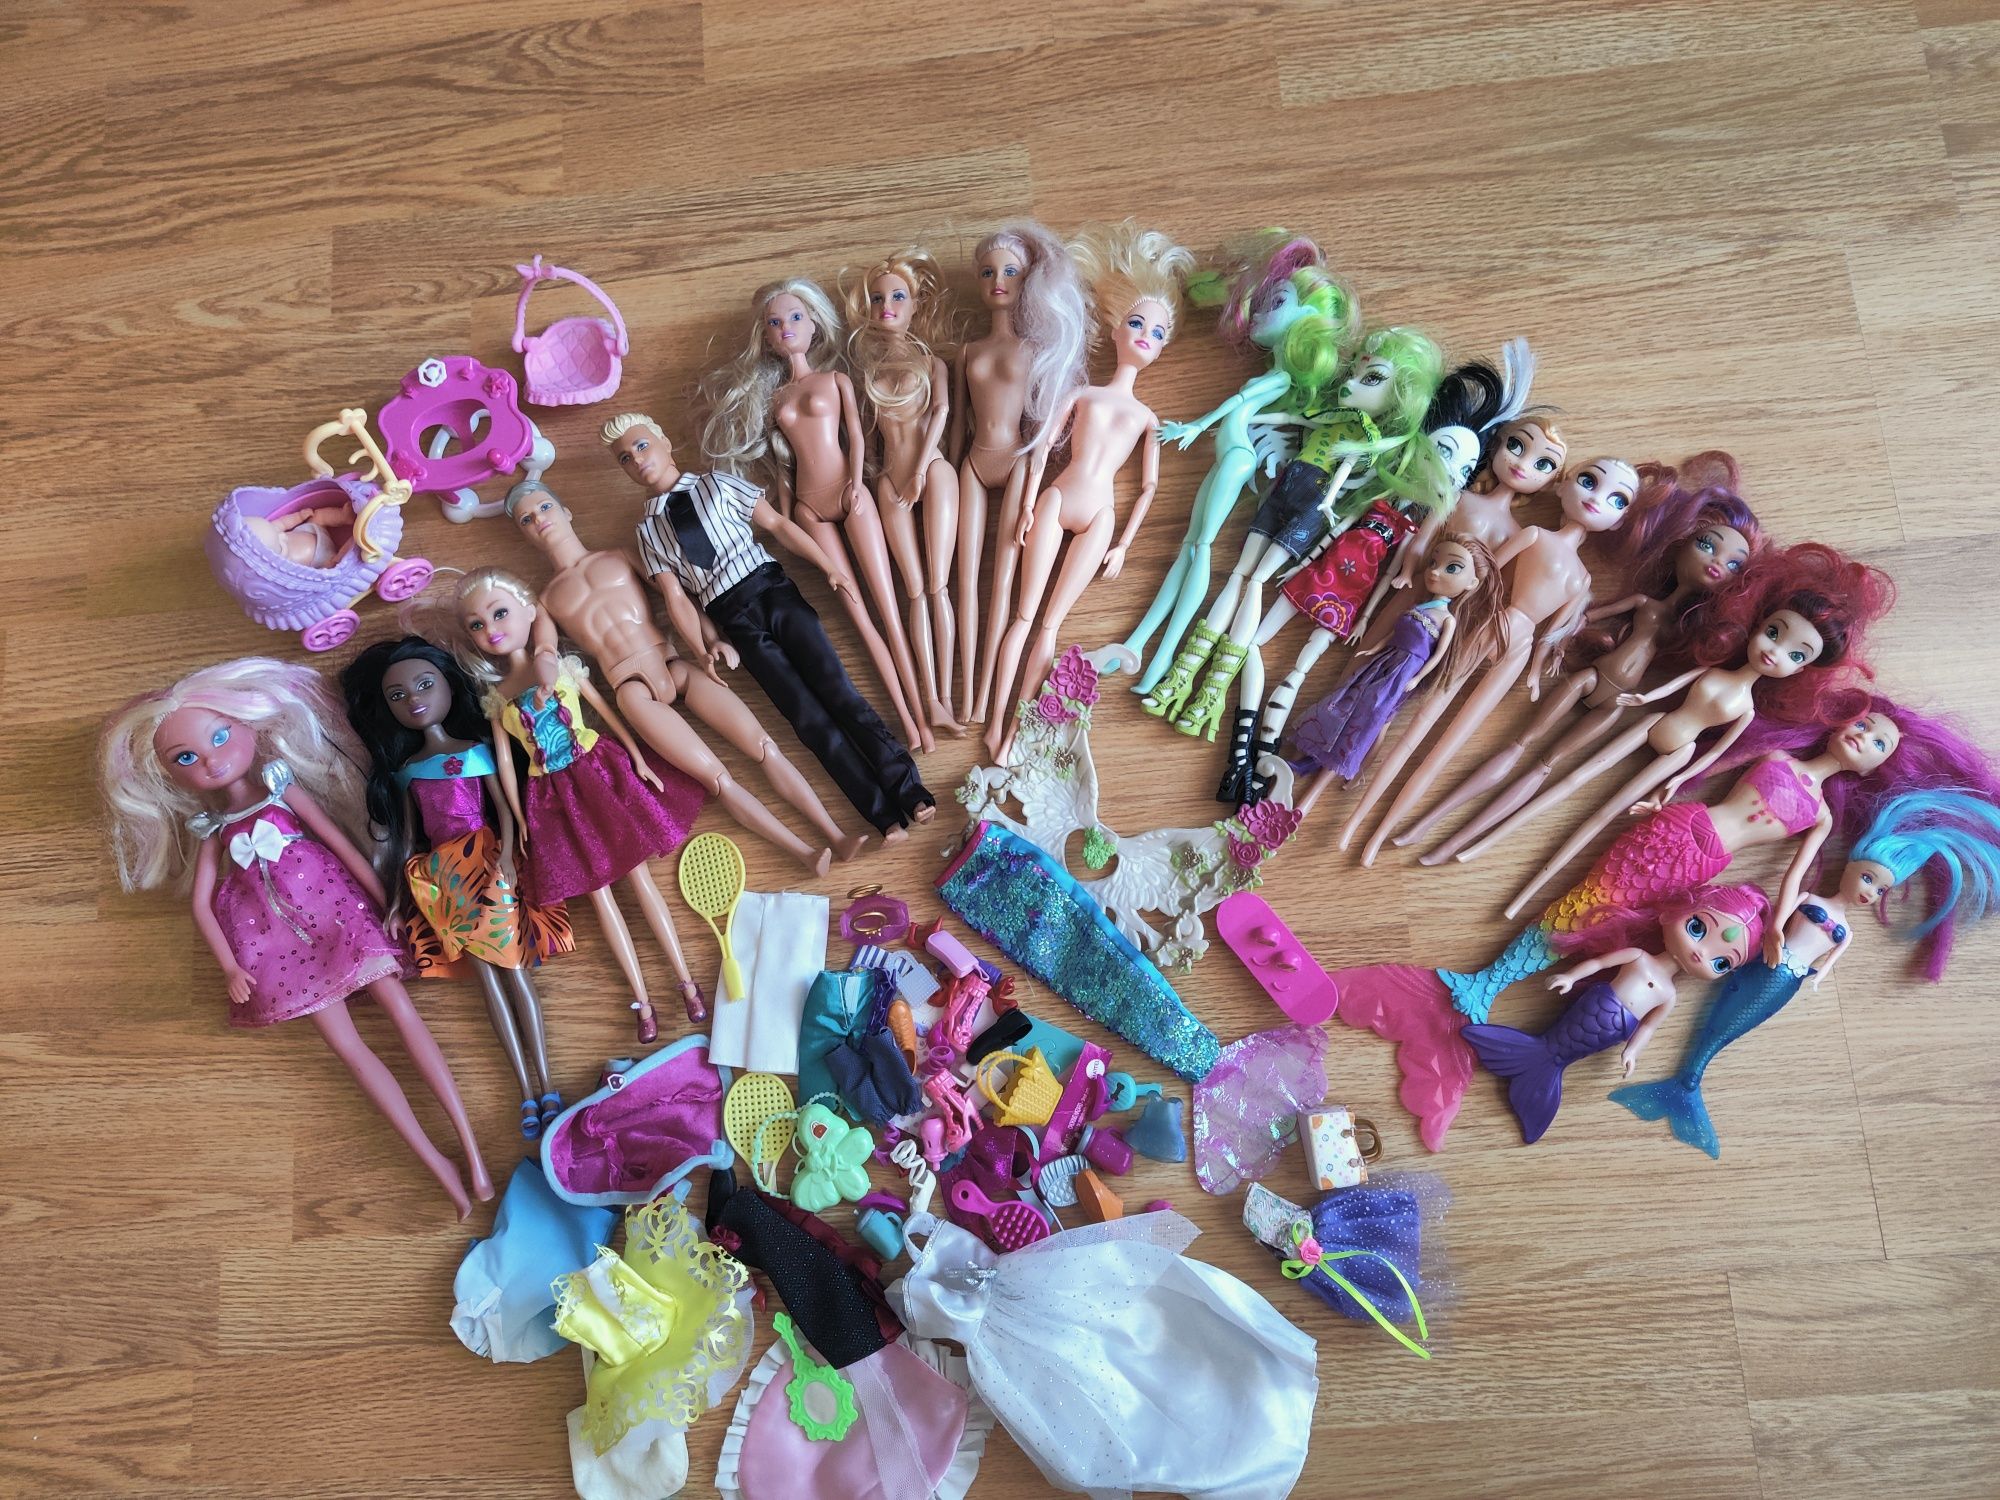 Залишки Barbie, Disney, Frozen, Monster high, Русалки та інші